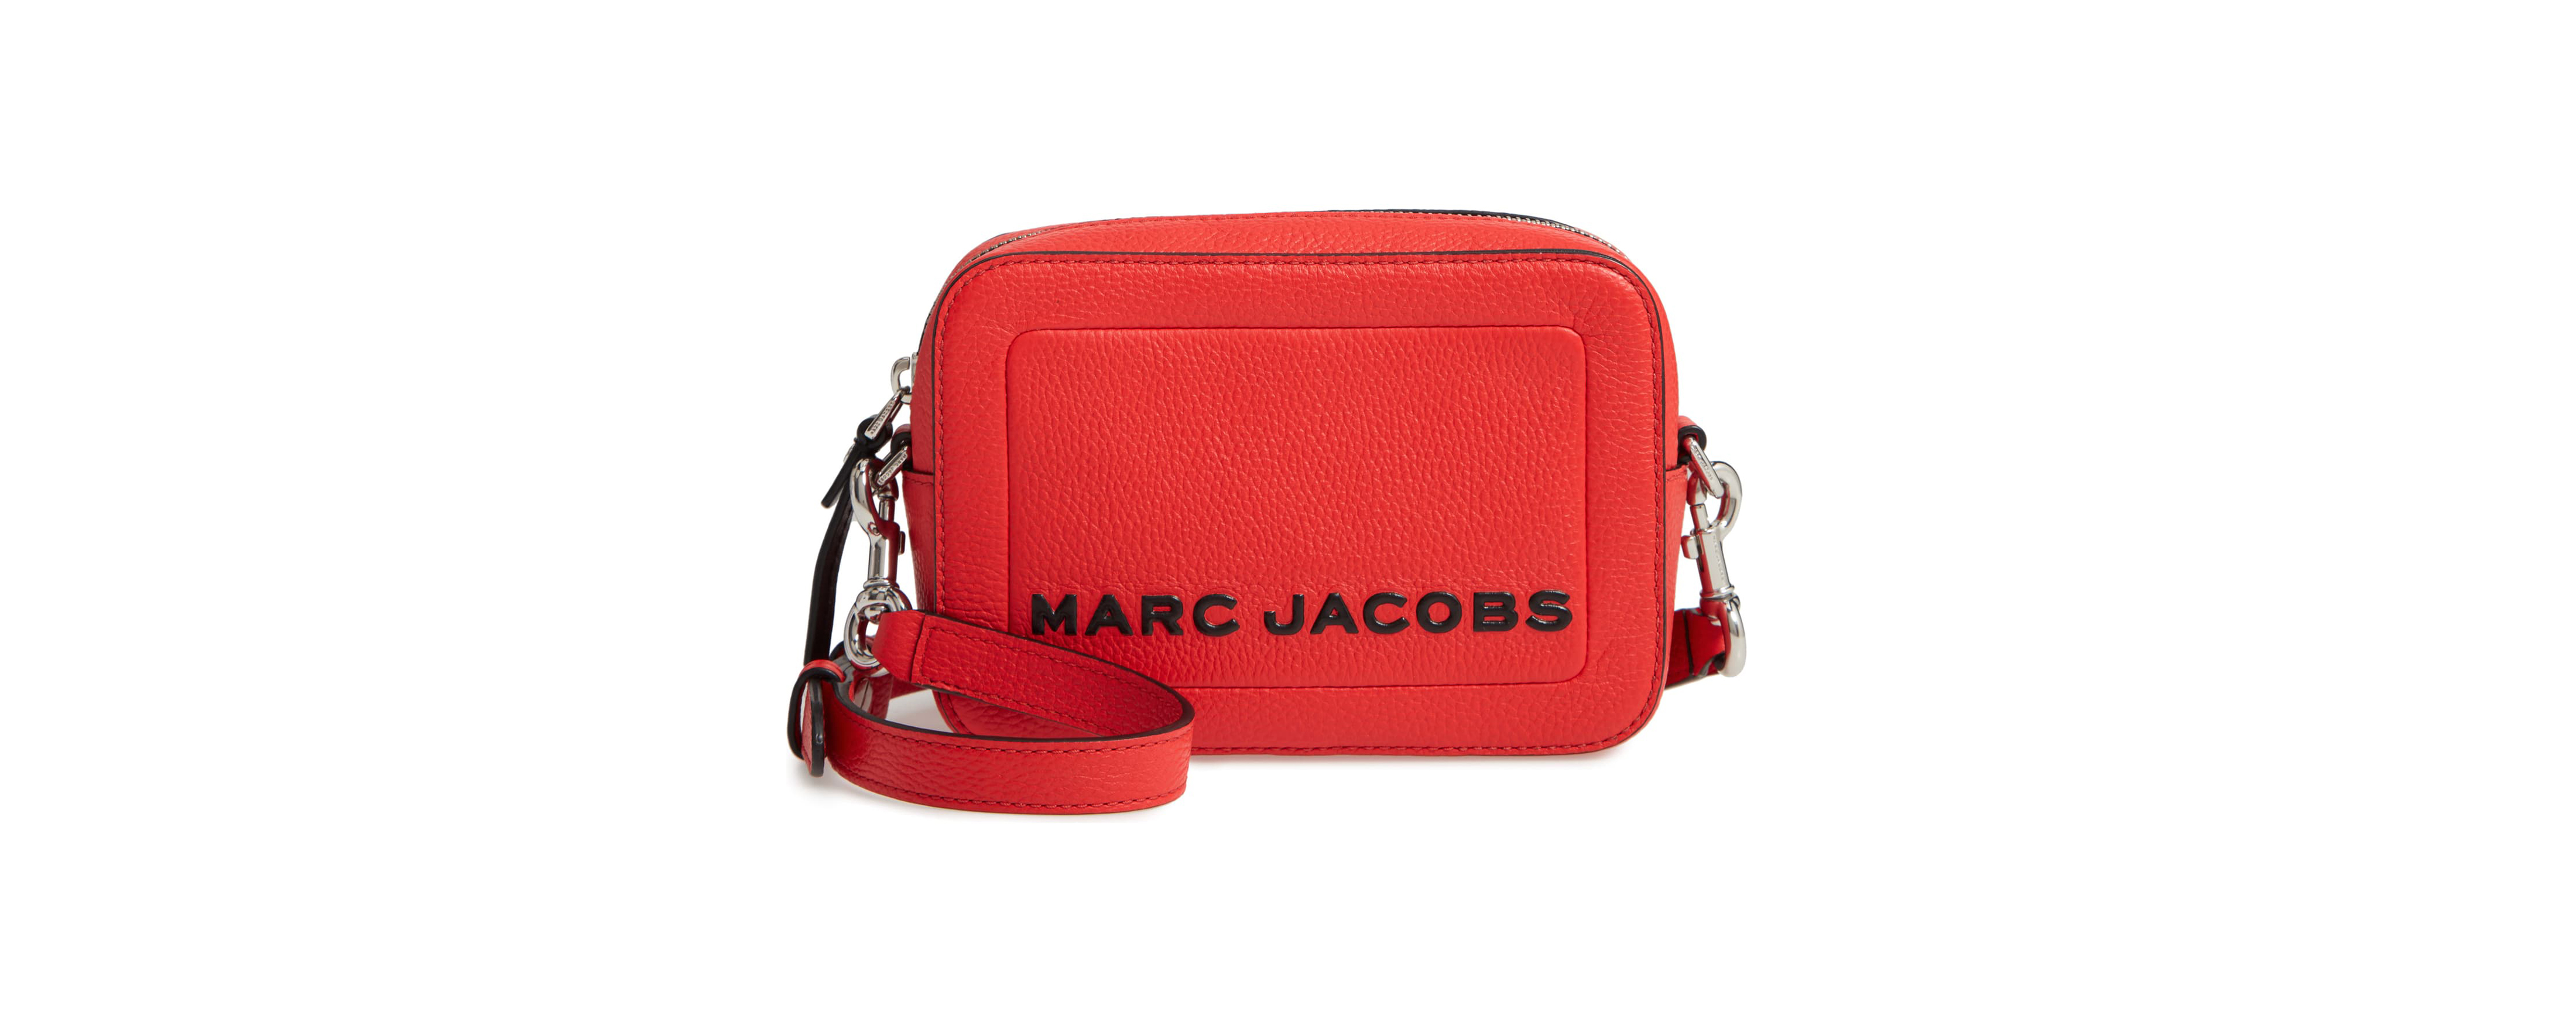 marc jacobs crossbody sale